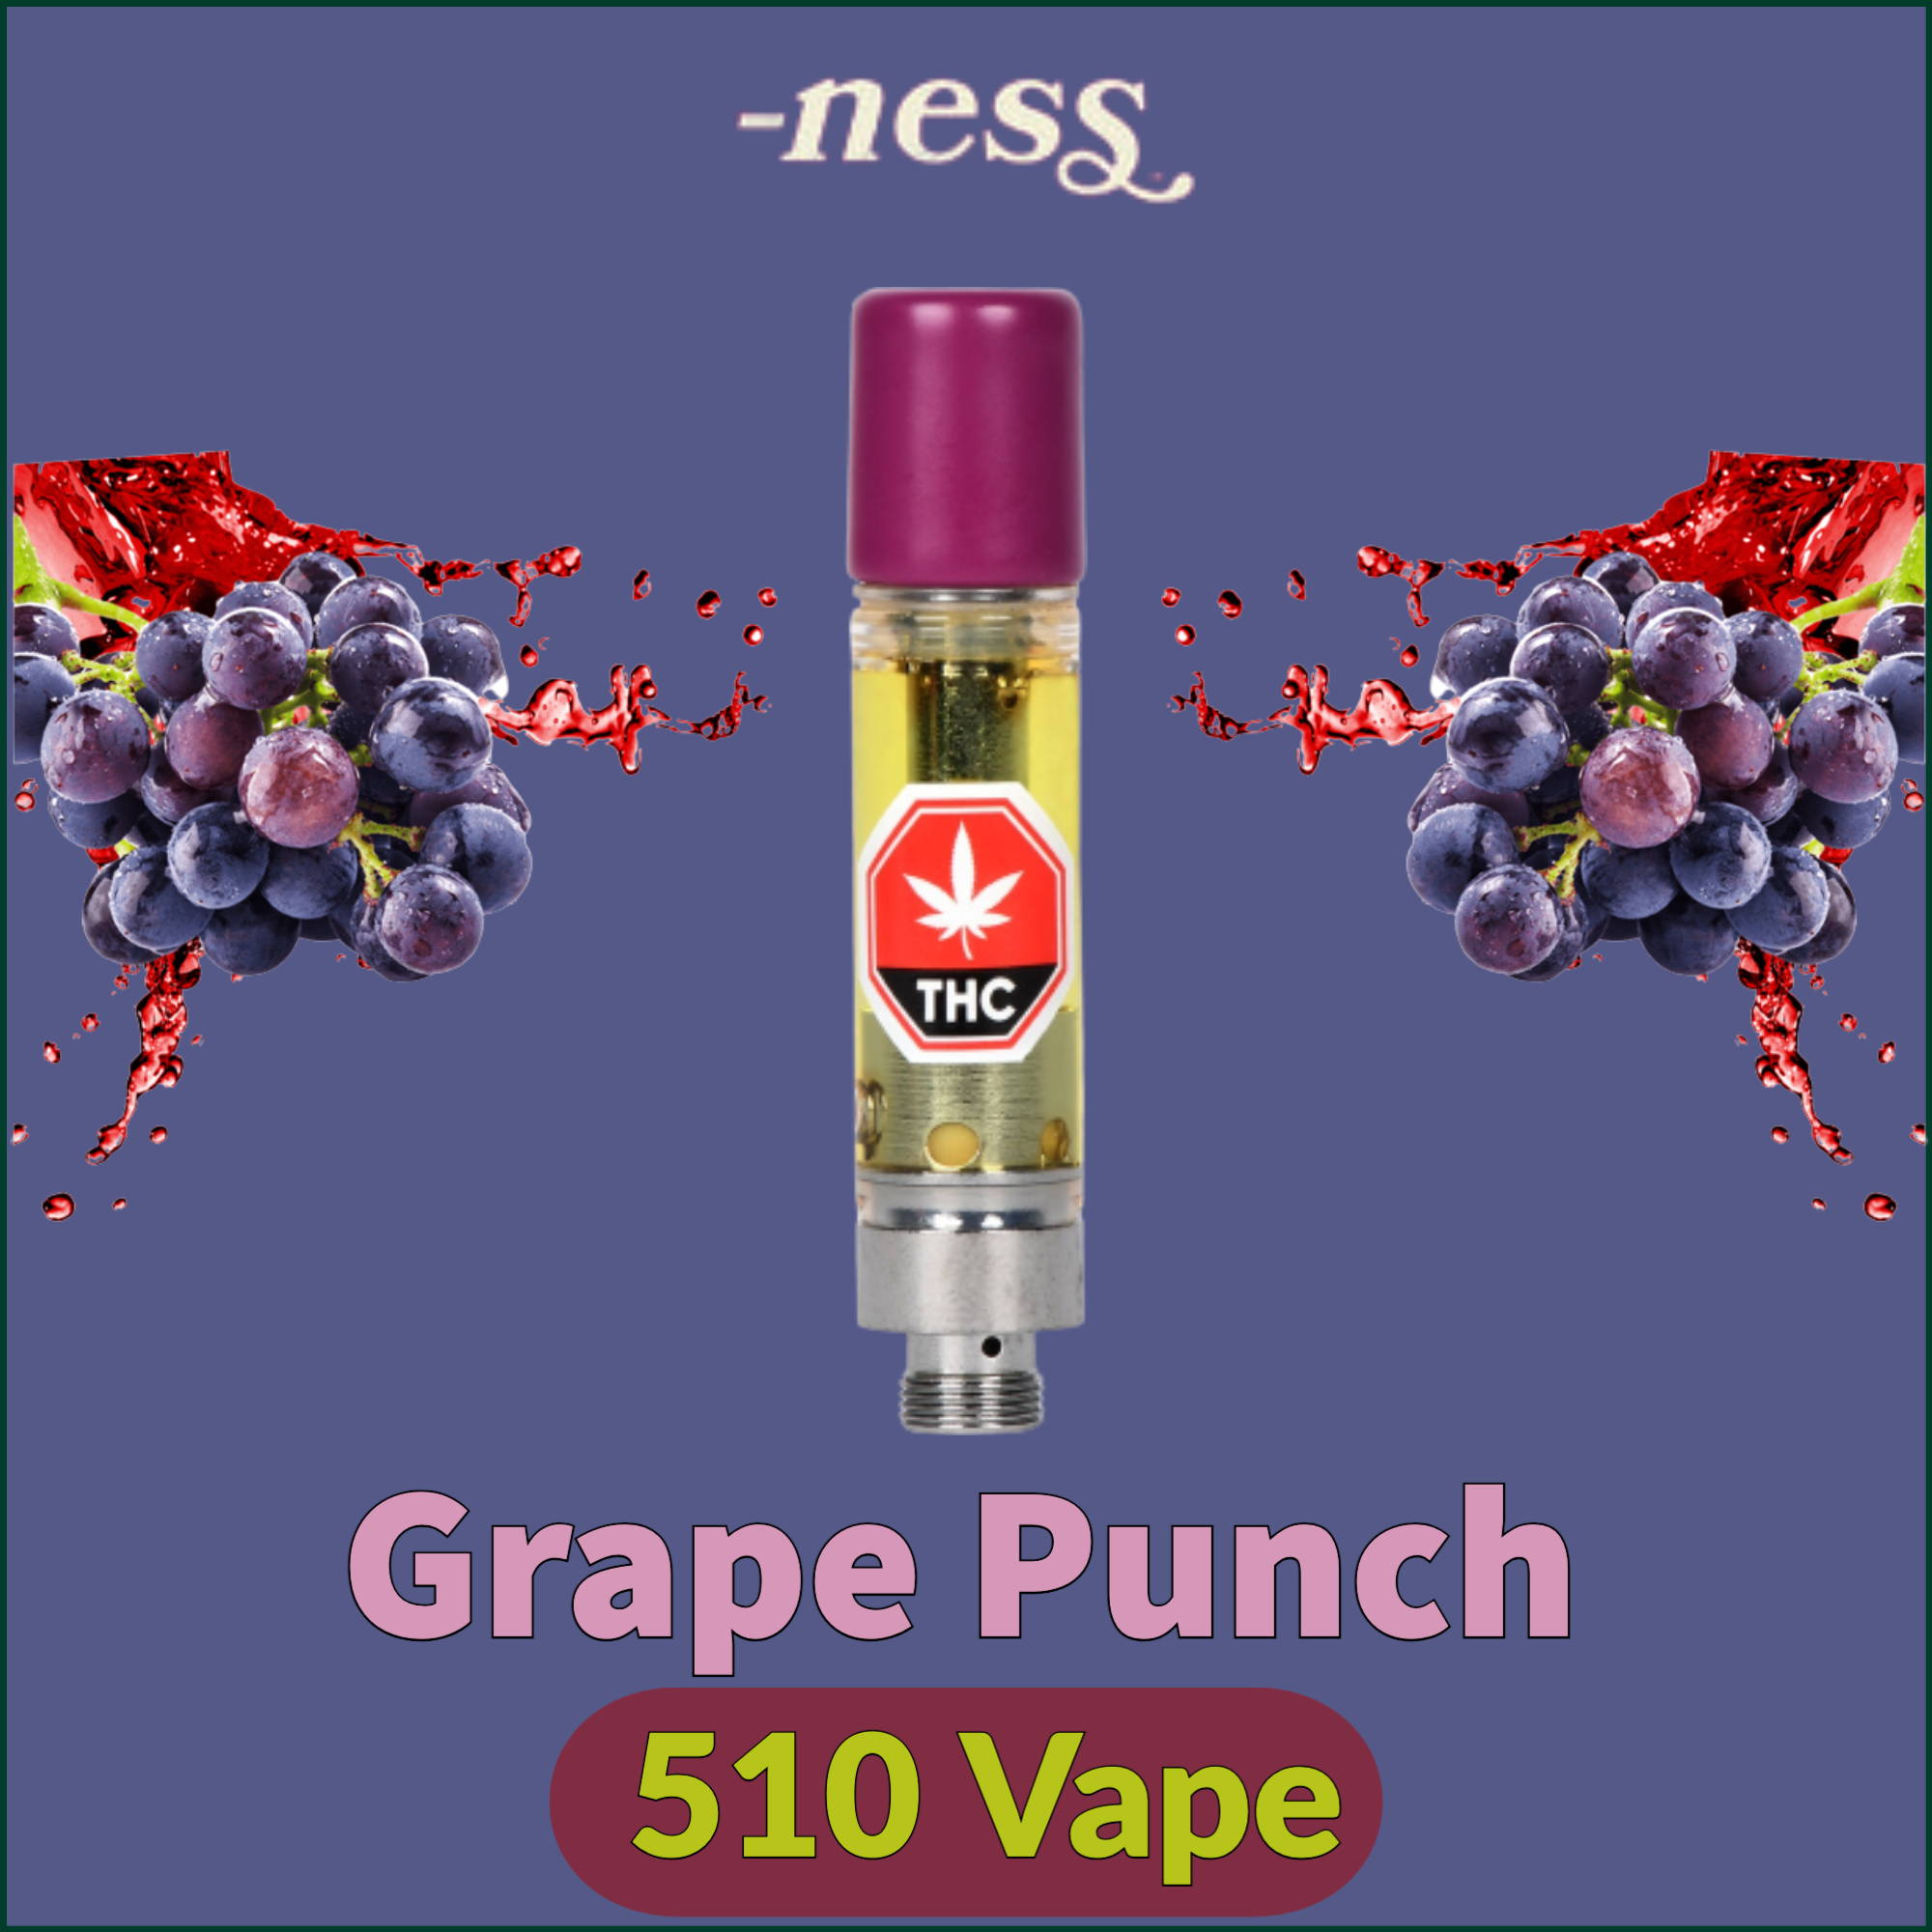 Grape Punch 510 Vape by ness | Jupiter Cannabis Winnipeg